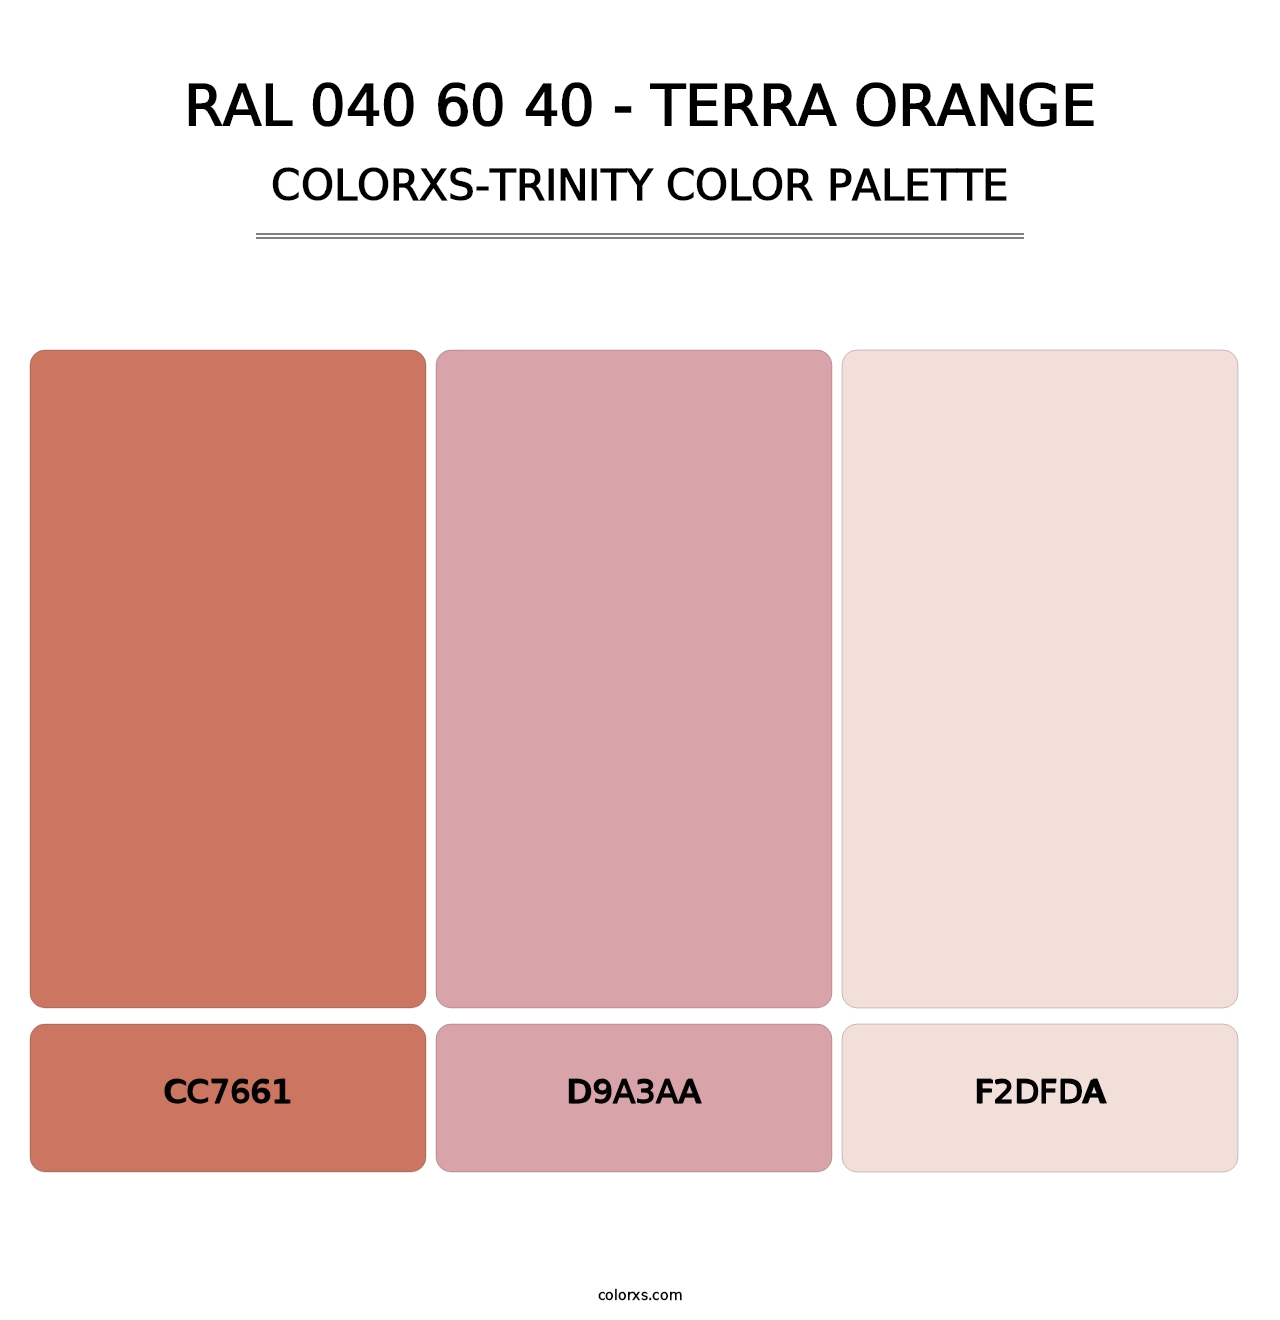 RAL 040 60 40 - Terra Orange - Colorxs Trinity Palette